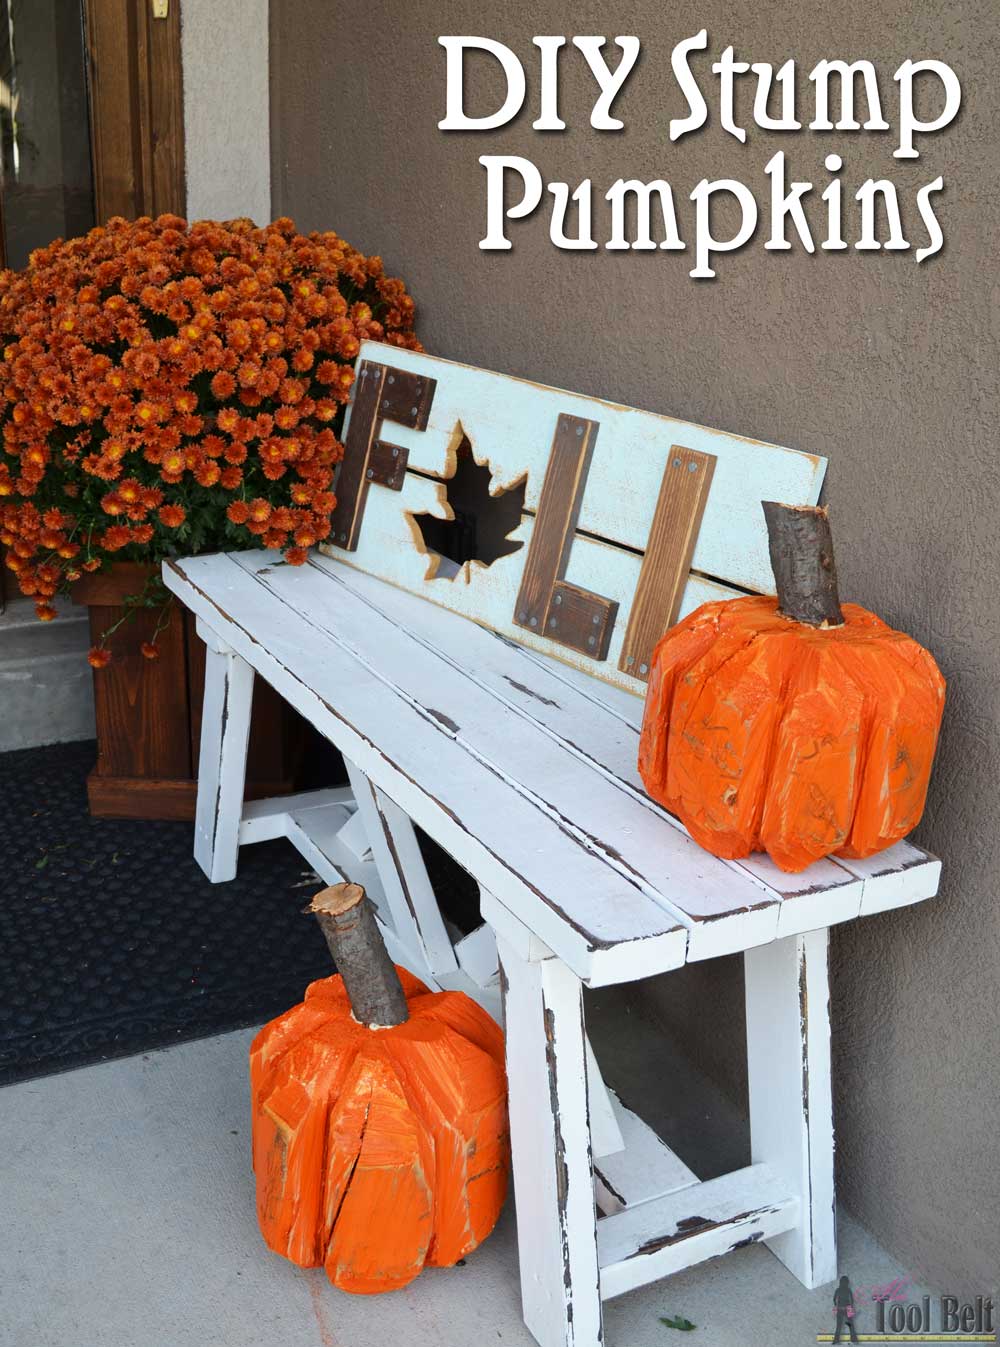 DIY Stump pumpkins